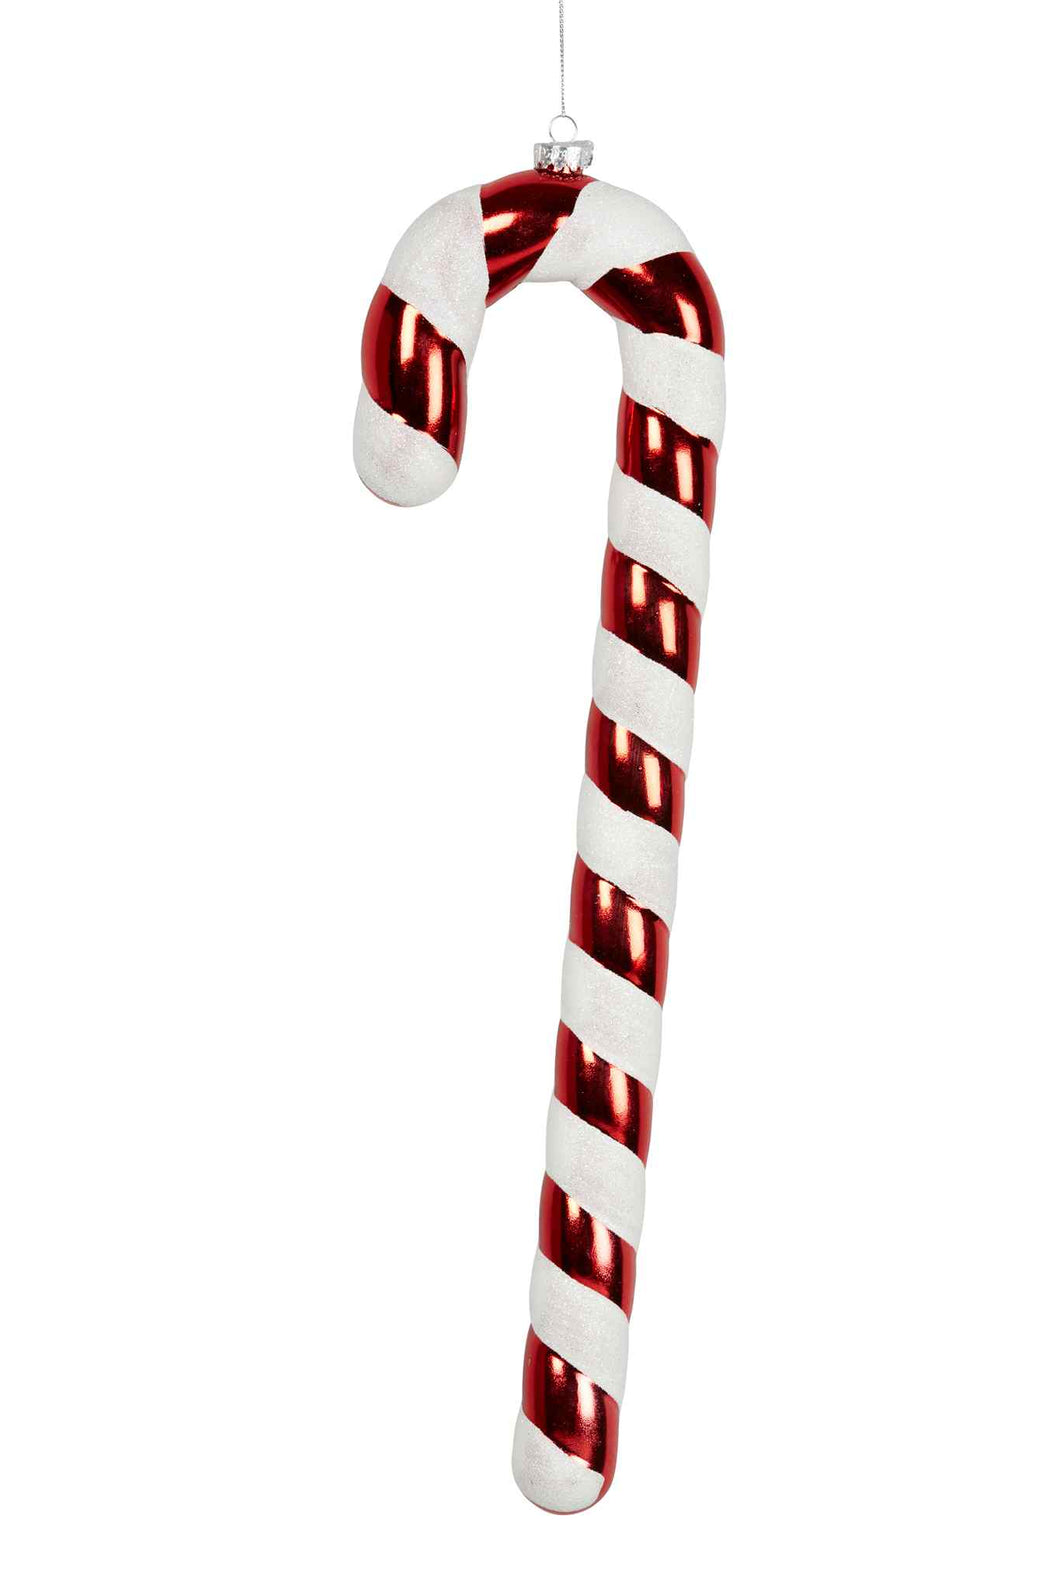 41cM XL Christmas Candy Cane Decoration